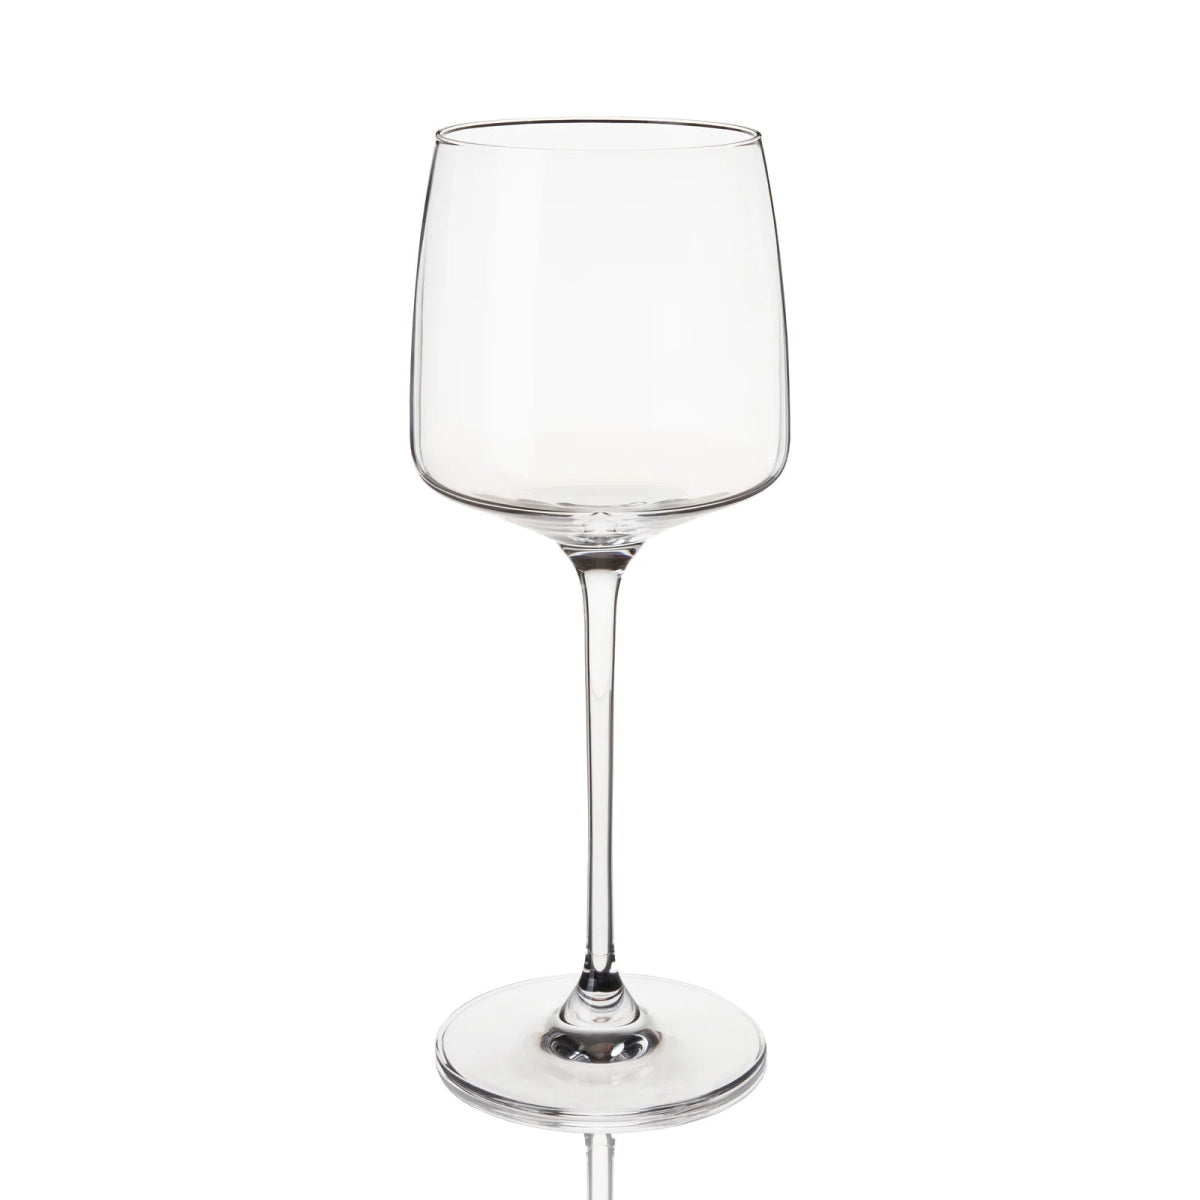 Viski Reserve Julien Crystal Chardonnay Glasses, Set of 4 - lily & onyx